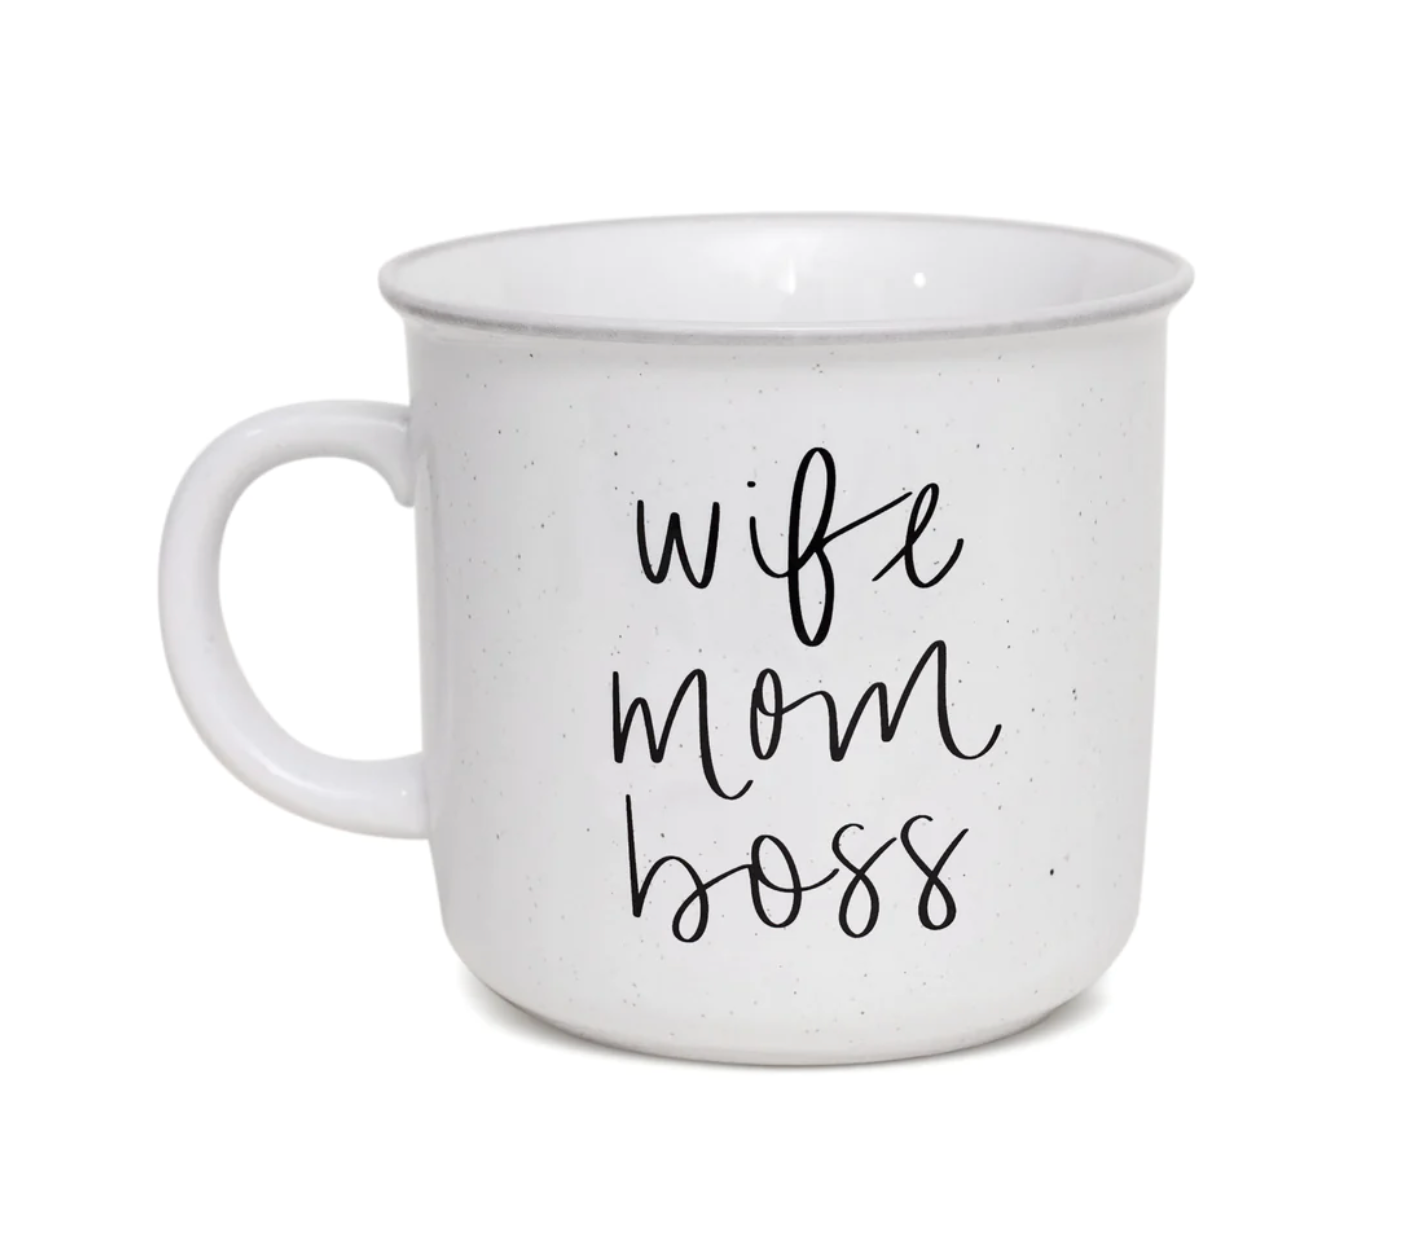 Wife Mom Boss - Tasse